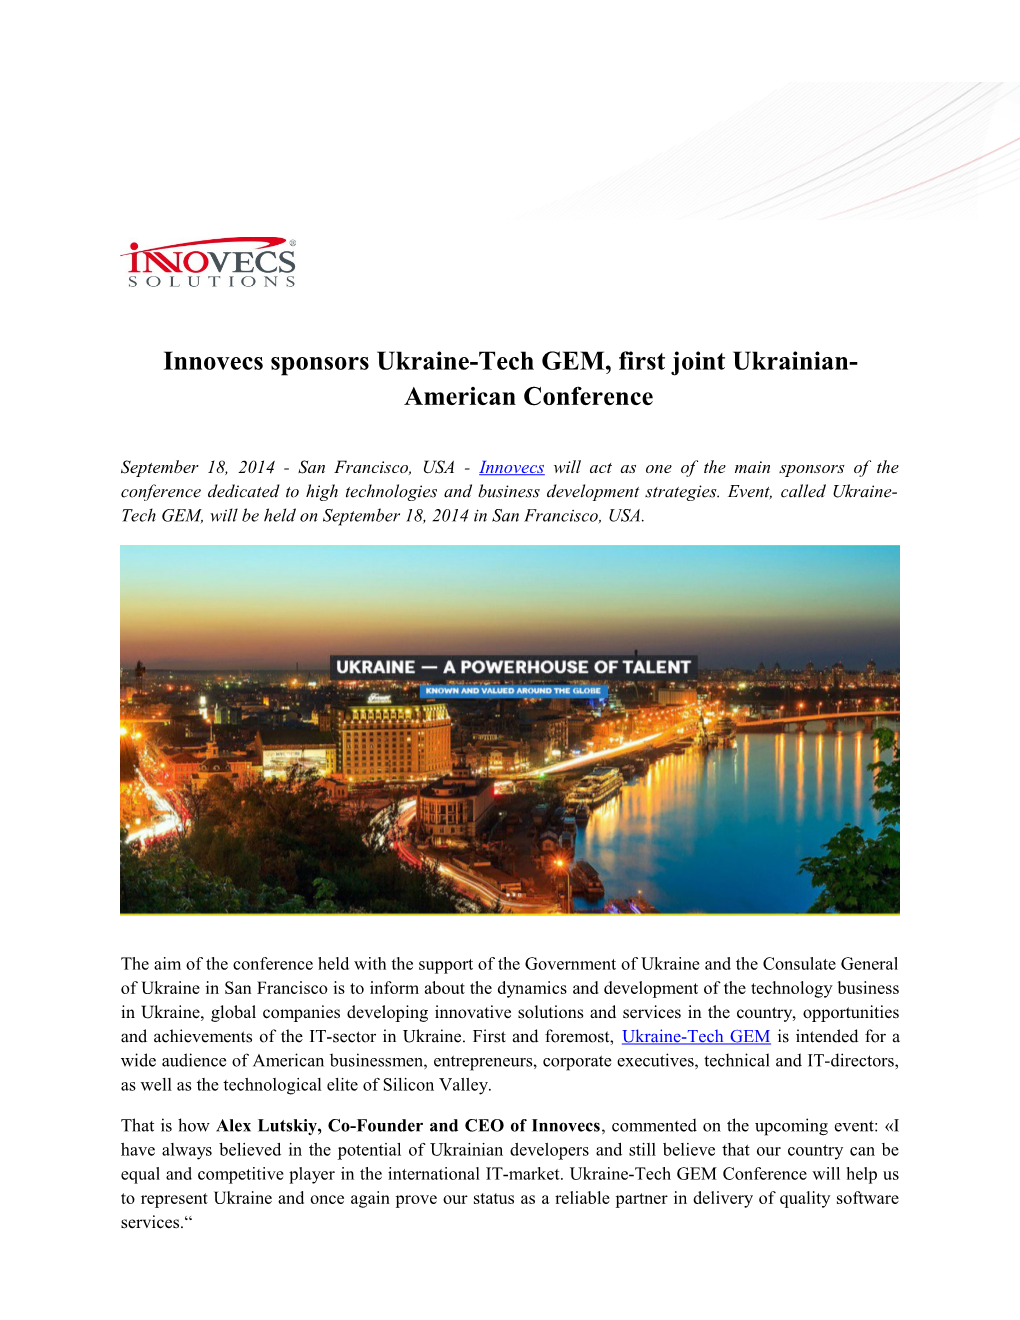 Innovecs Sponsors Ukraine-Tech GEM, First Joint Ukrainian-American Conference